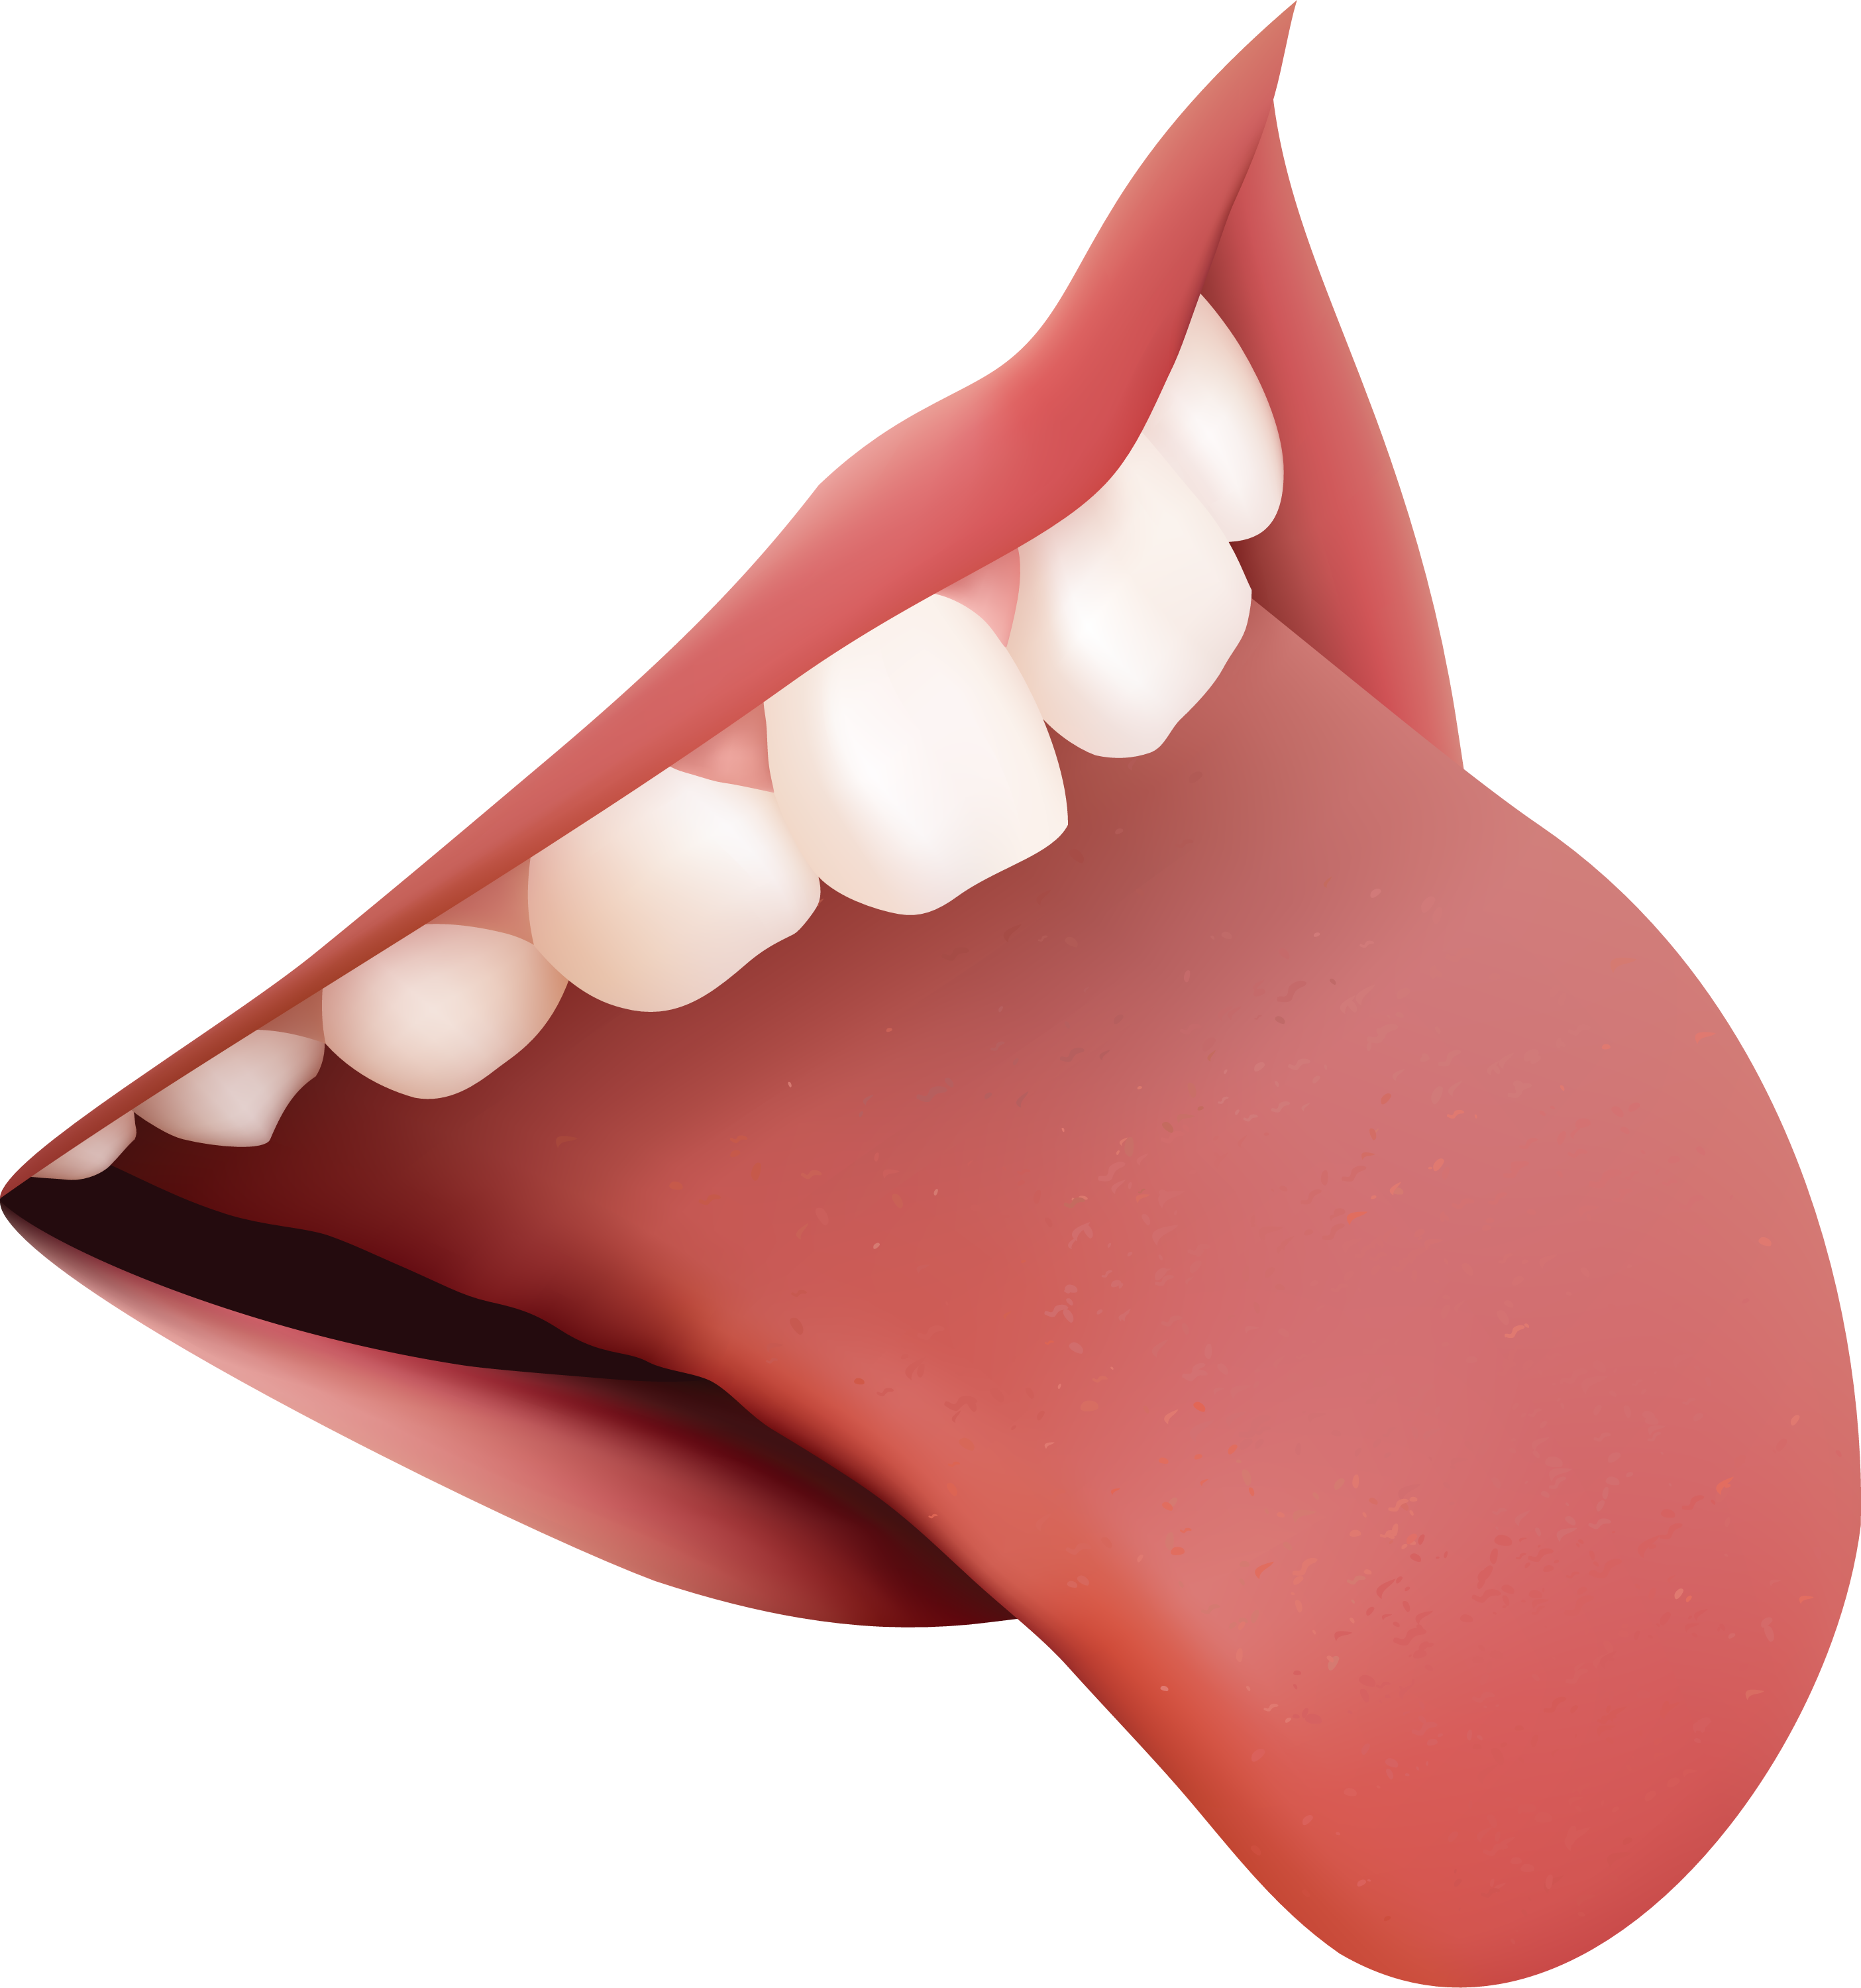 Teeth PNG-PlusPNG pluspng.com